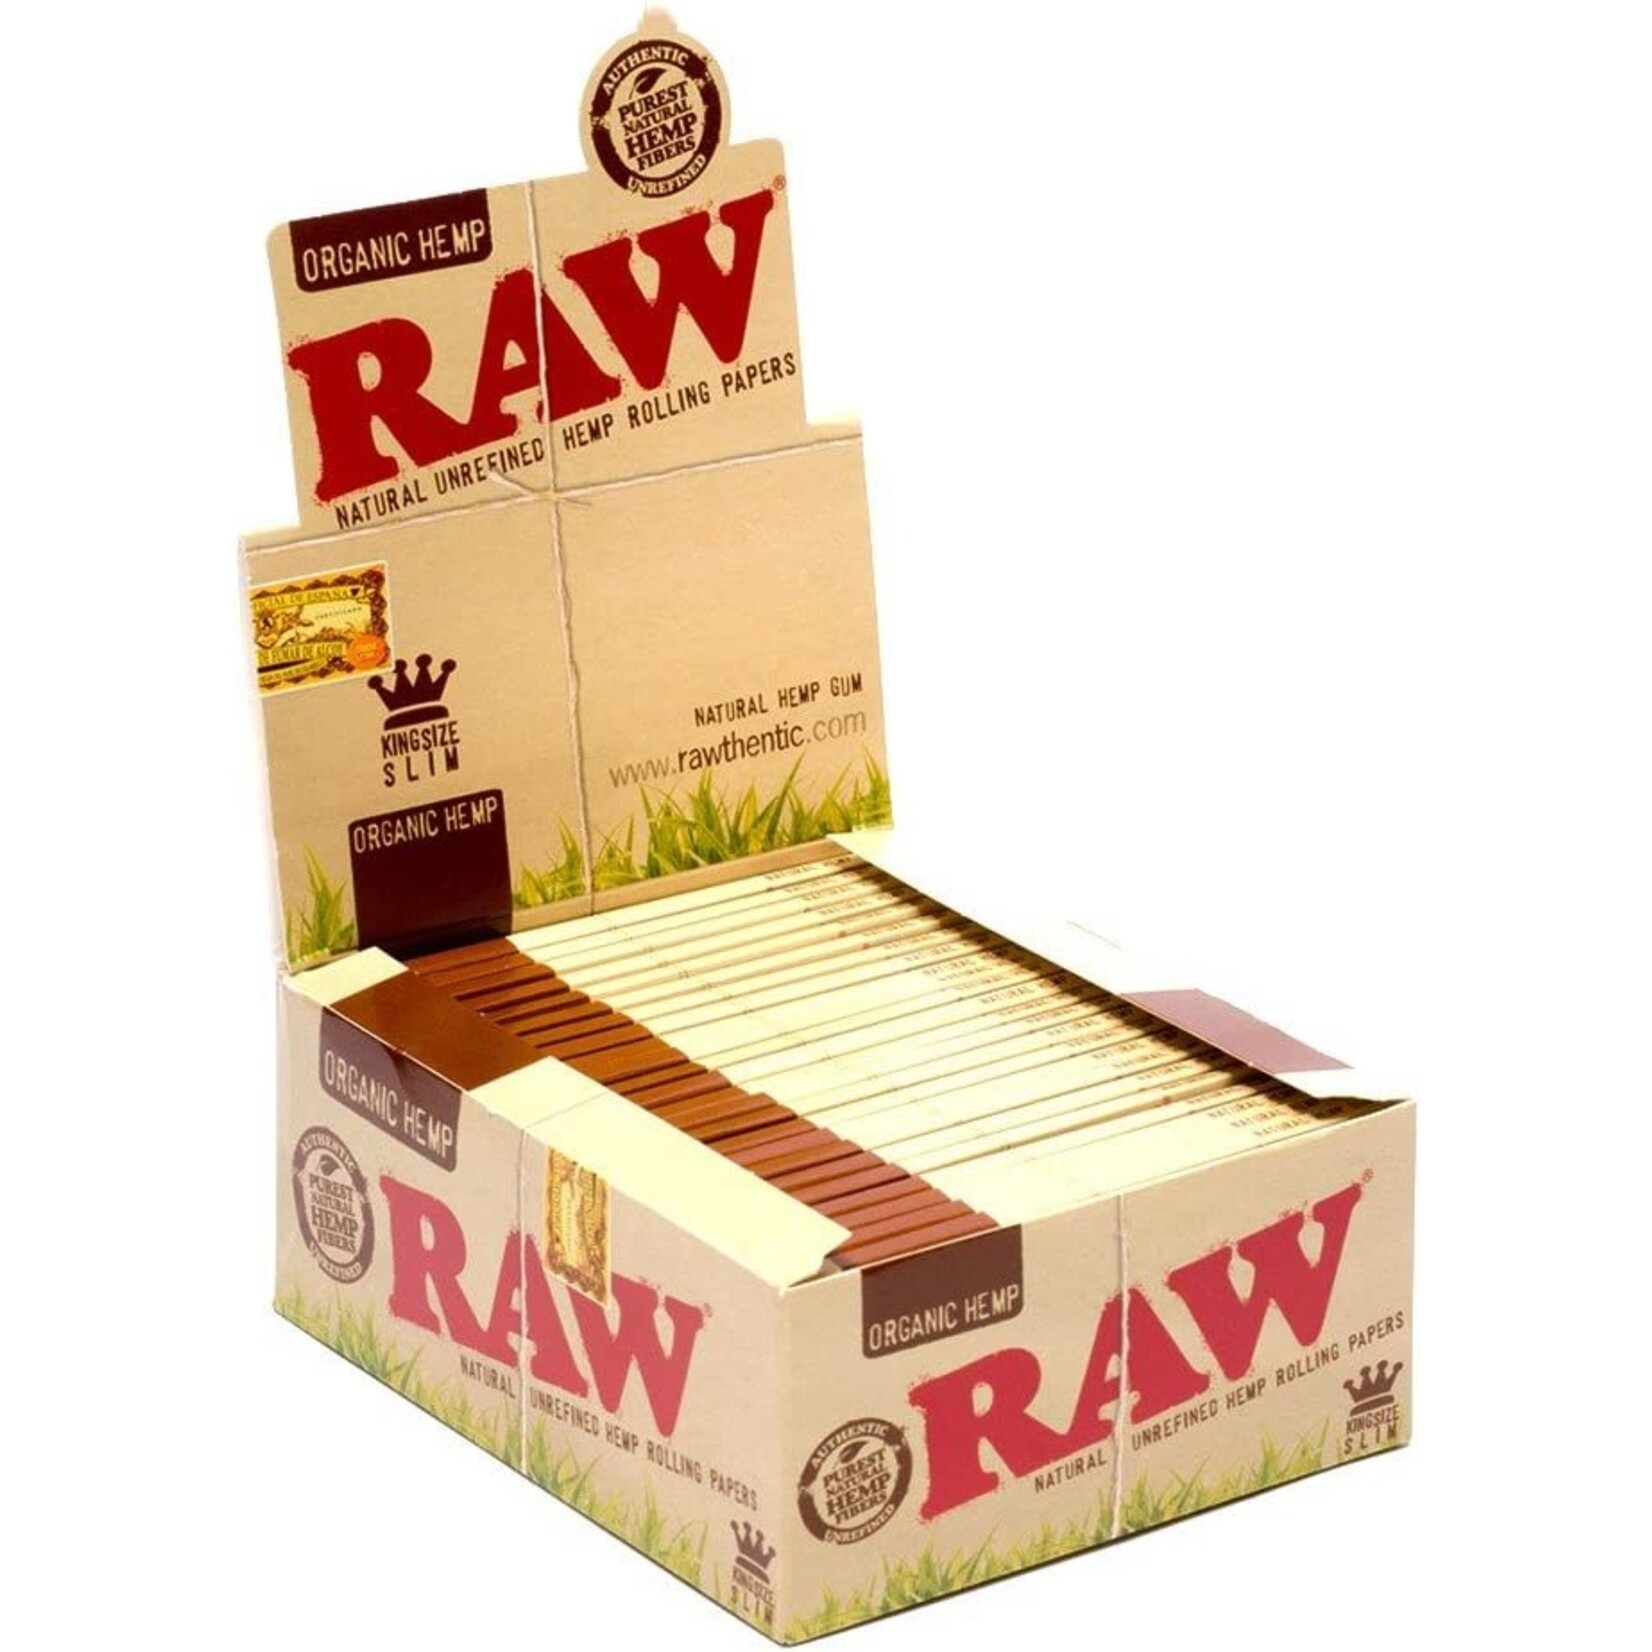 Raw Organic Hemp Slim King Size Rolling Papers